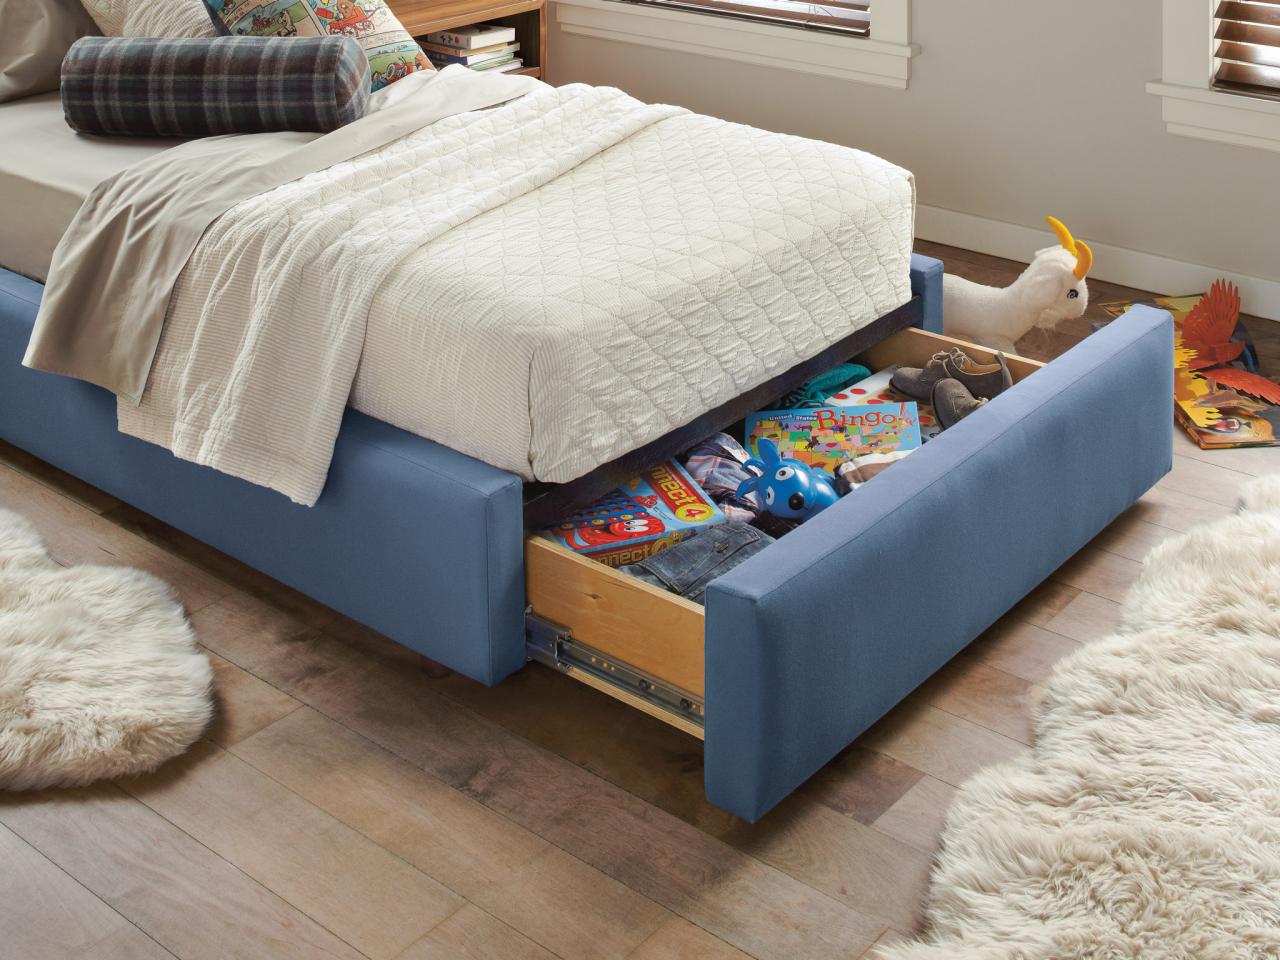 15 Children's Storage Ideas For A Tidy Bedroom - Kids Storage